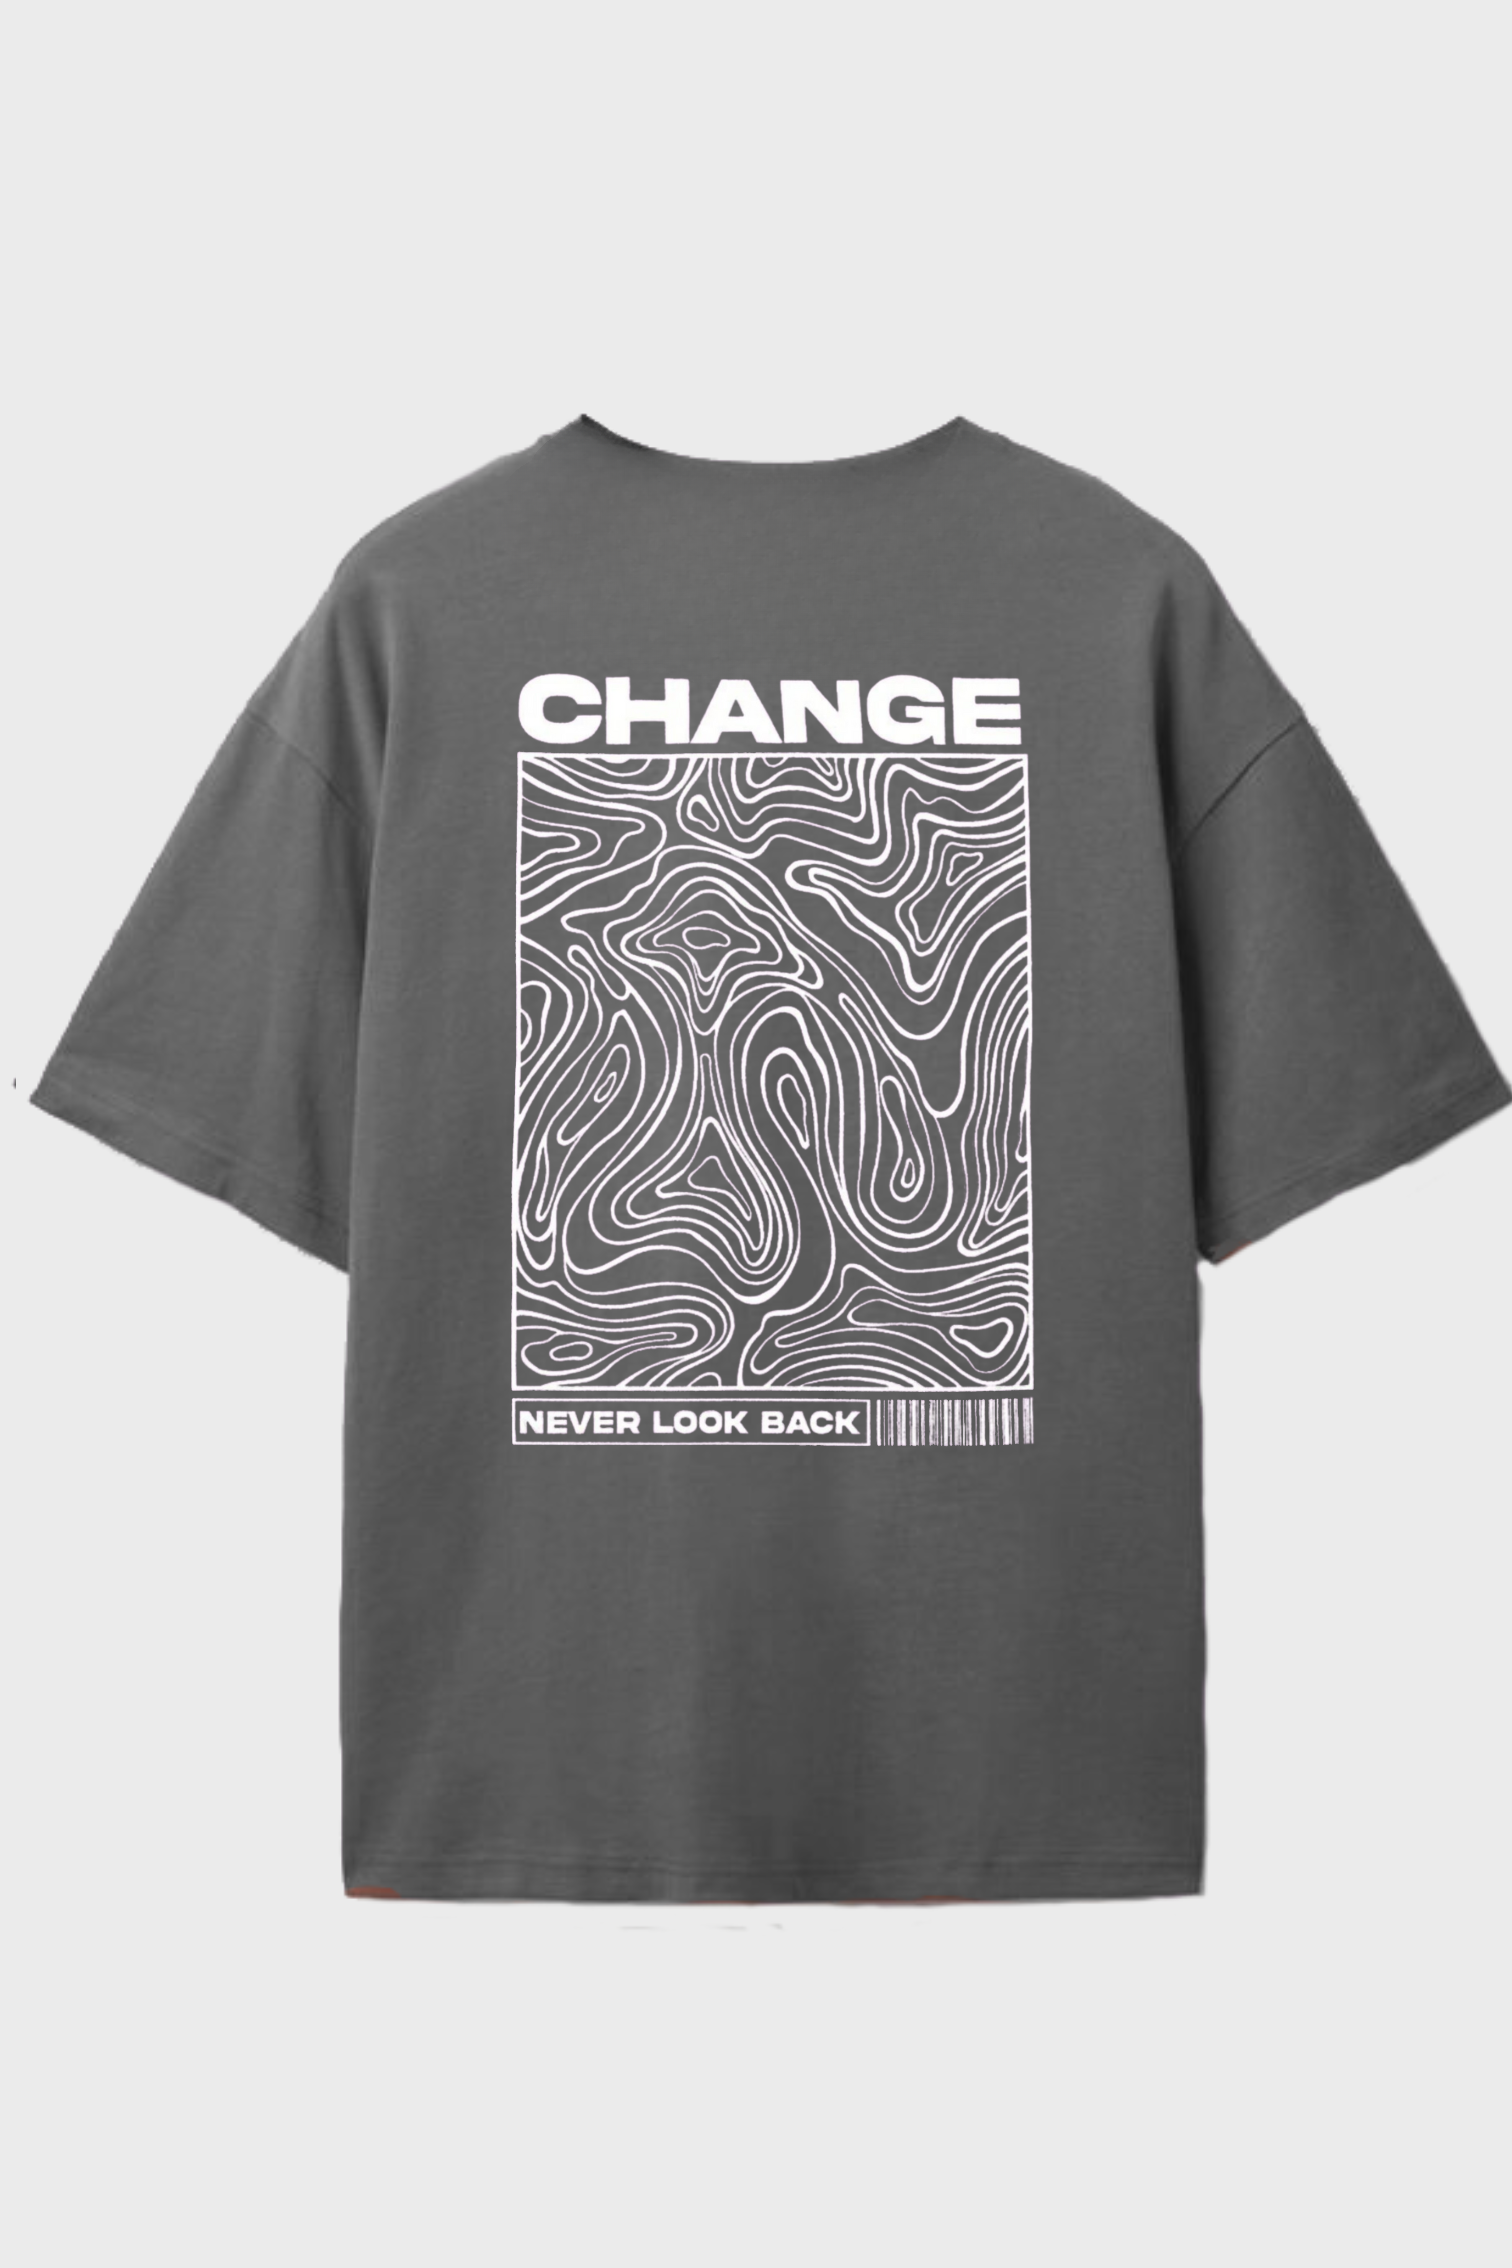 Change, Never Look Back- Oversized t-shirt